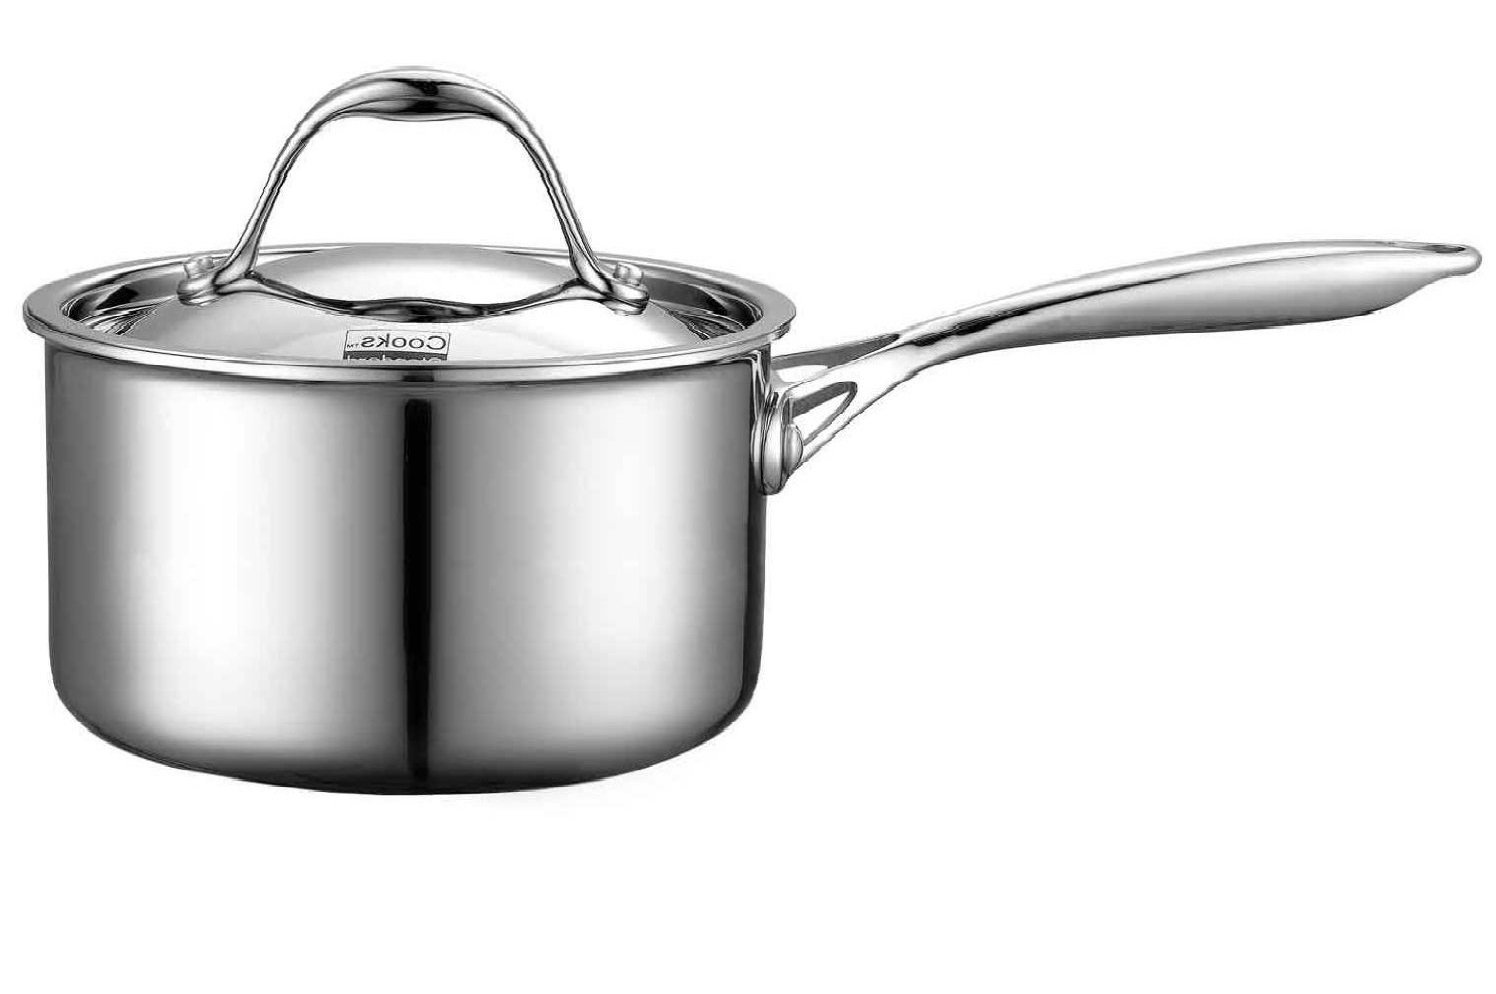 Cooks Standard Multi-Ply Clad Saucepan, 1-1/2-Quart, Silver